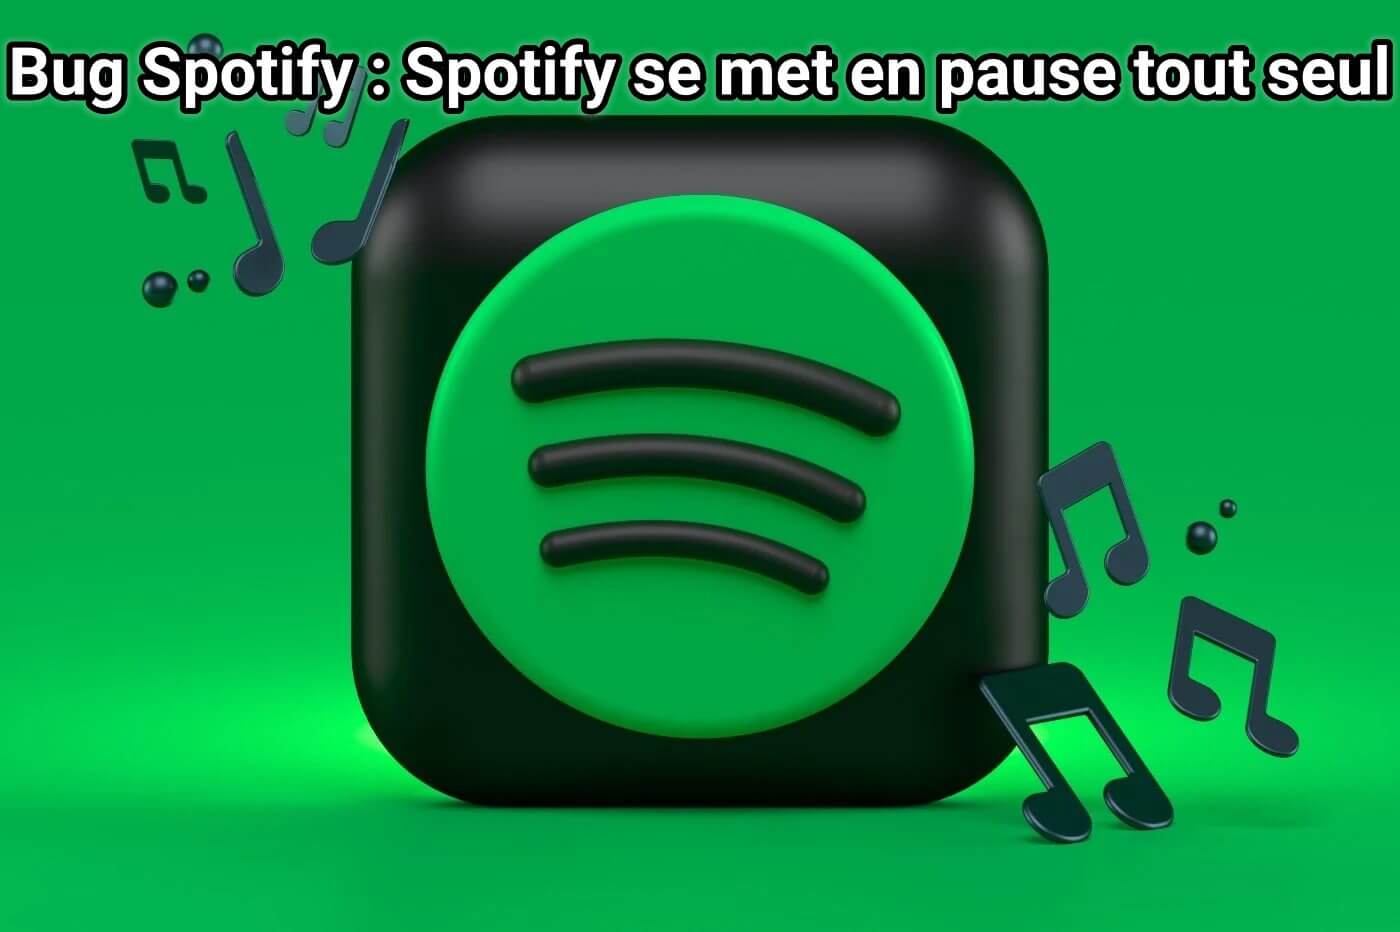 Spotify se met en pause tout seul